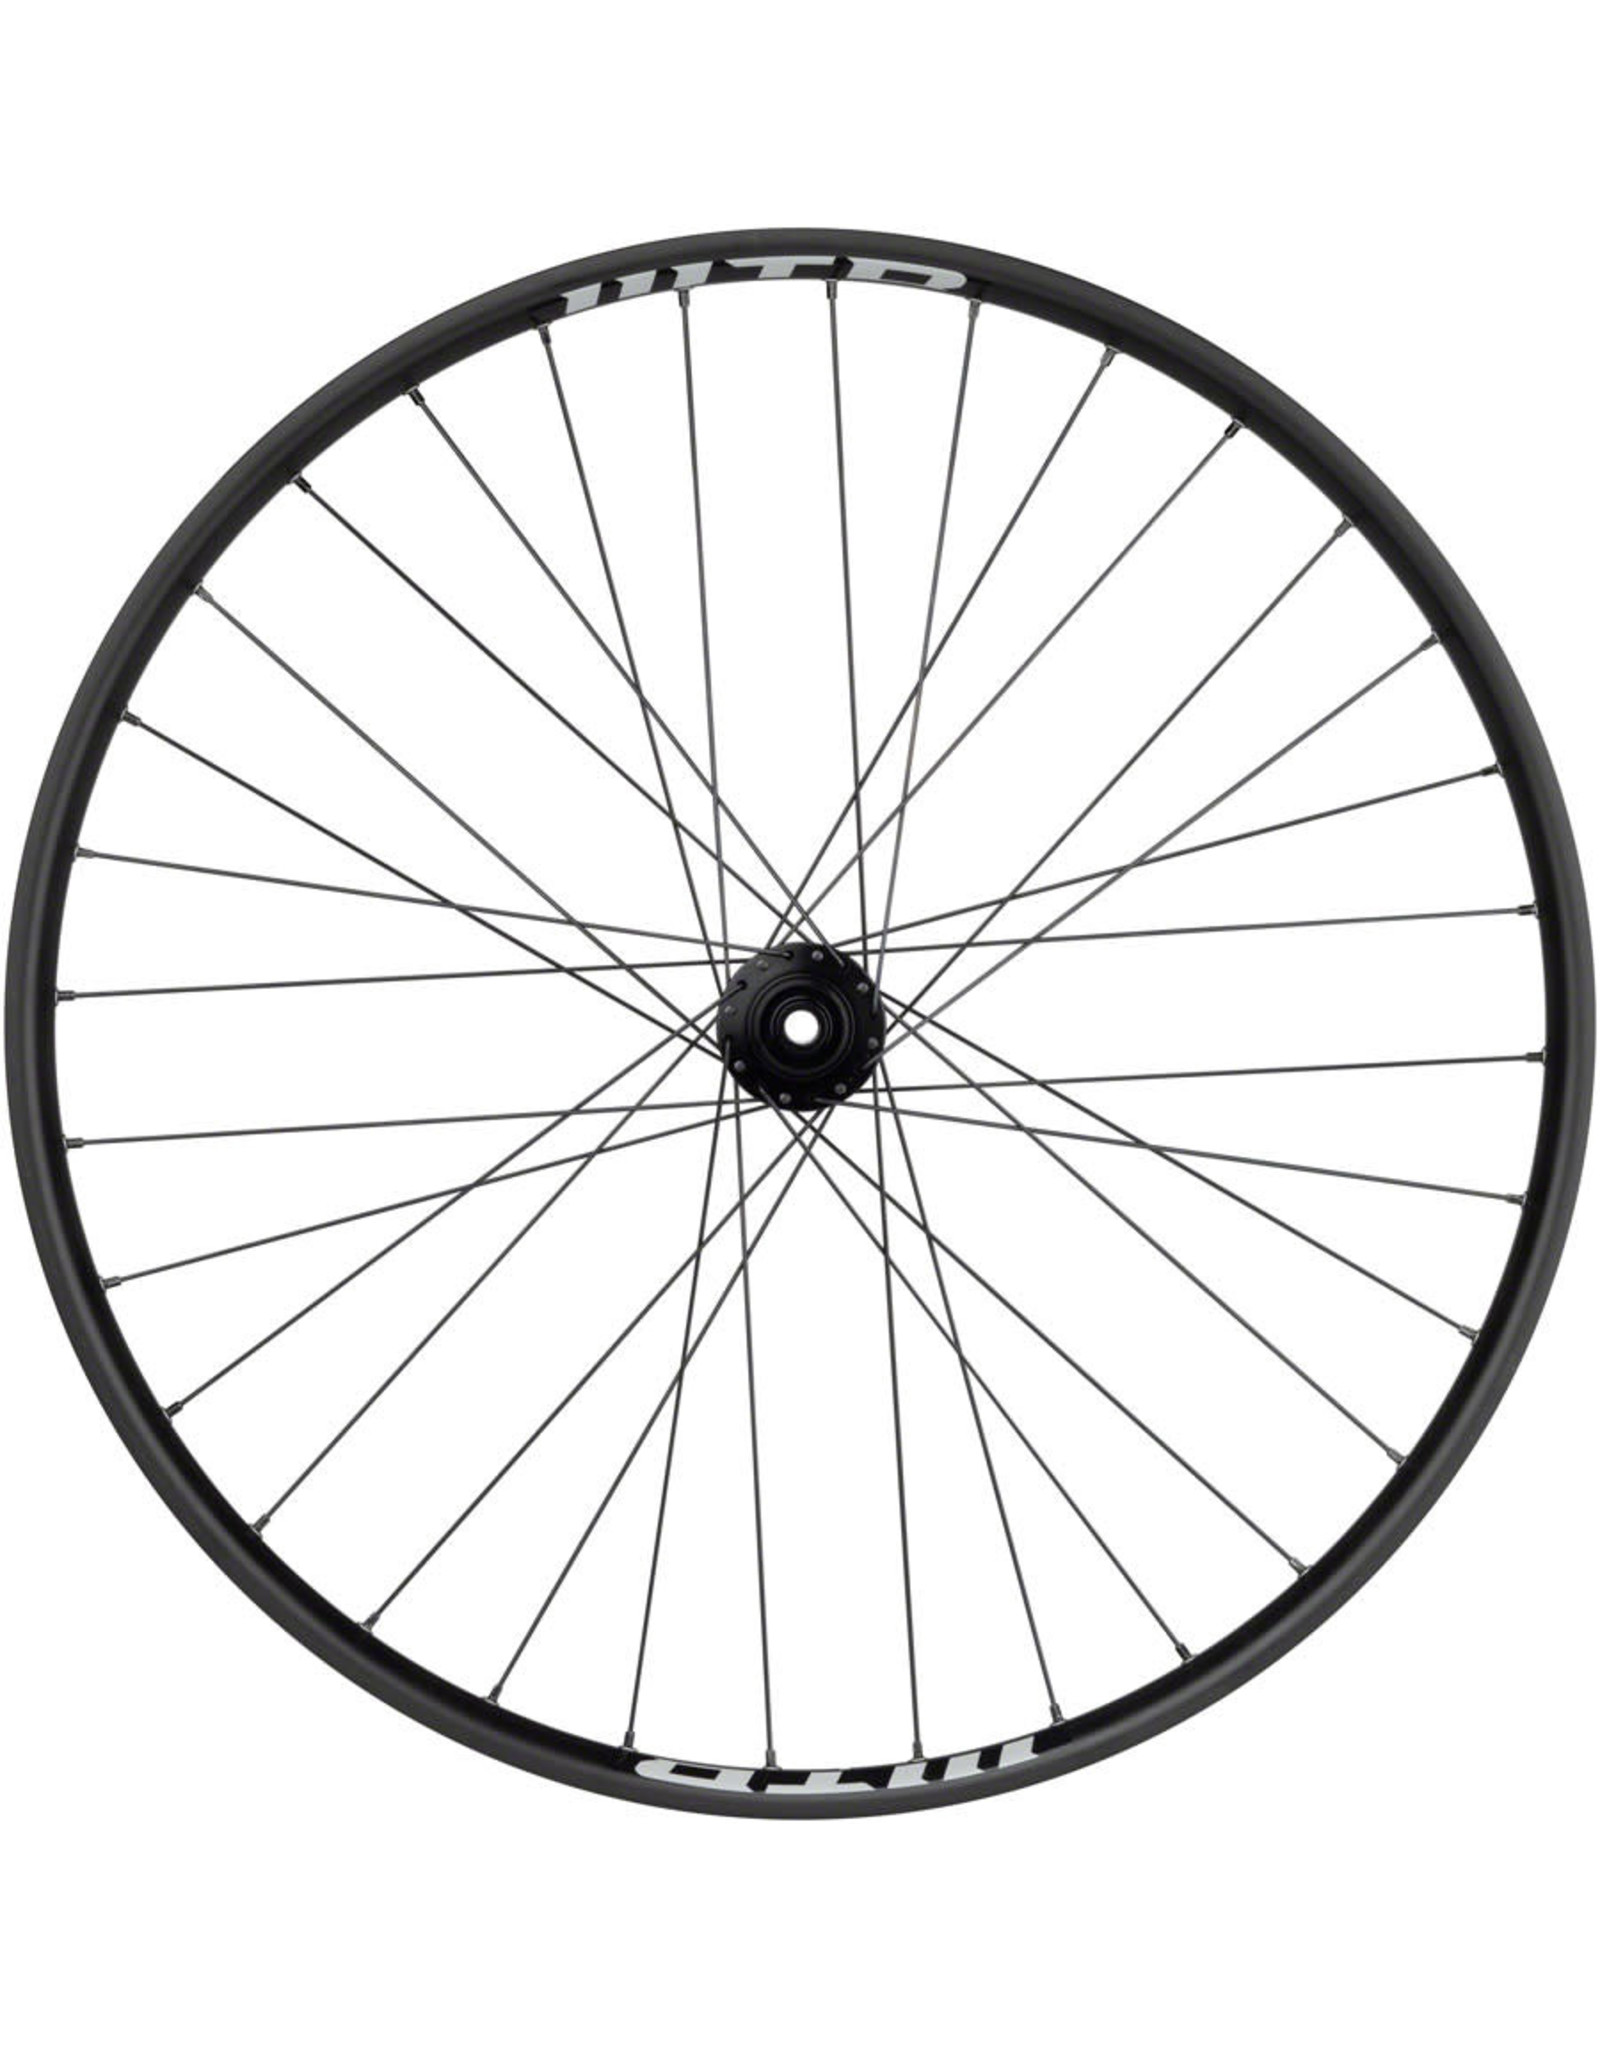 Quality Wheels WTB ST Light i29 Rear Wheel - 27.5", 12 x 148mm Boost, Center-Lock, HG 11, Black